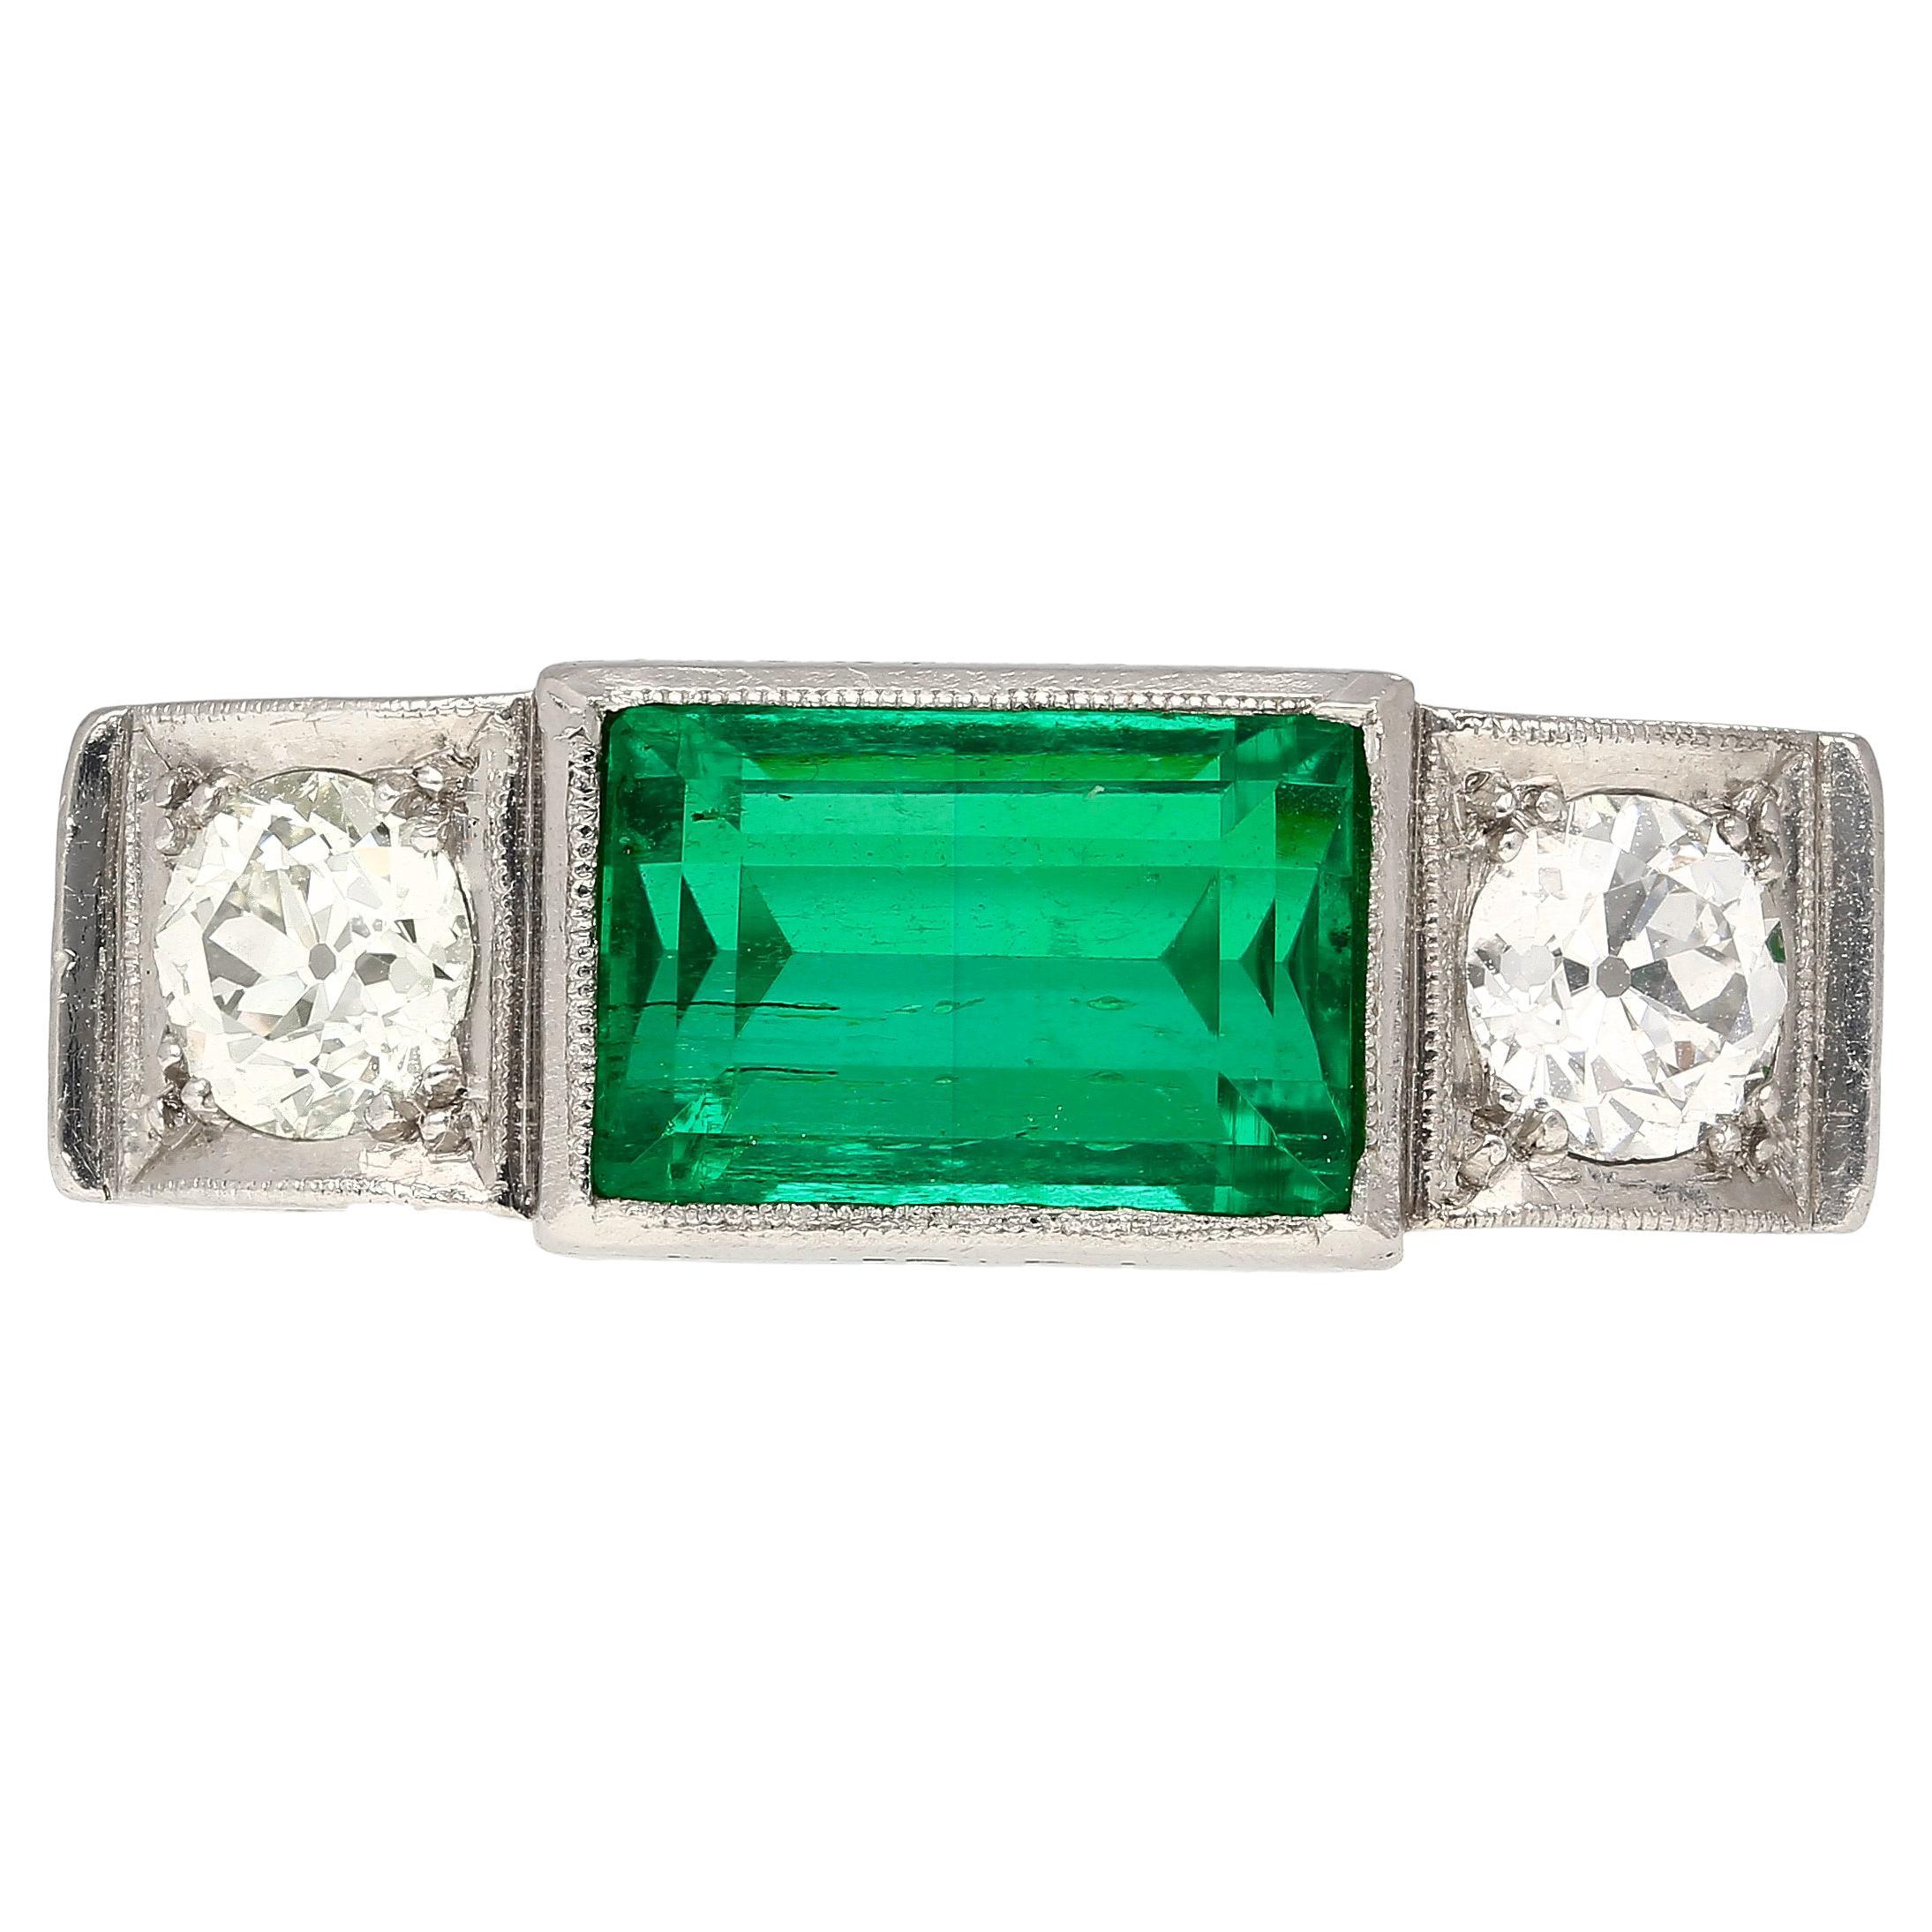 GIA Certified 3.10 Carat Old Mine Muzo Colombian Emerald & Old Cut Diamond Ring